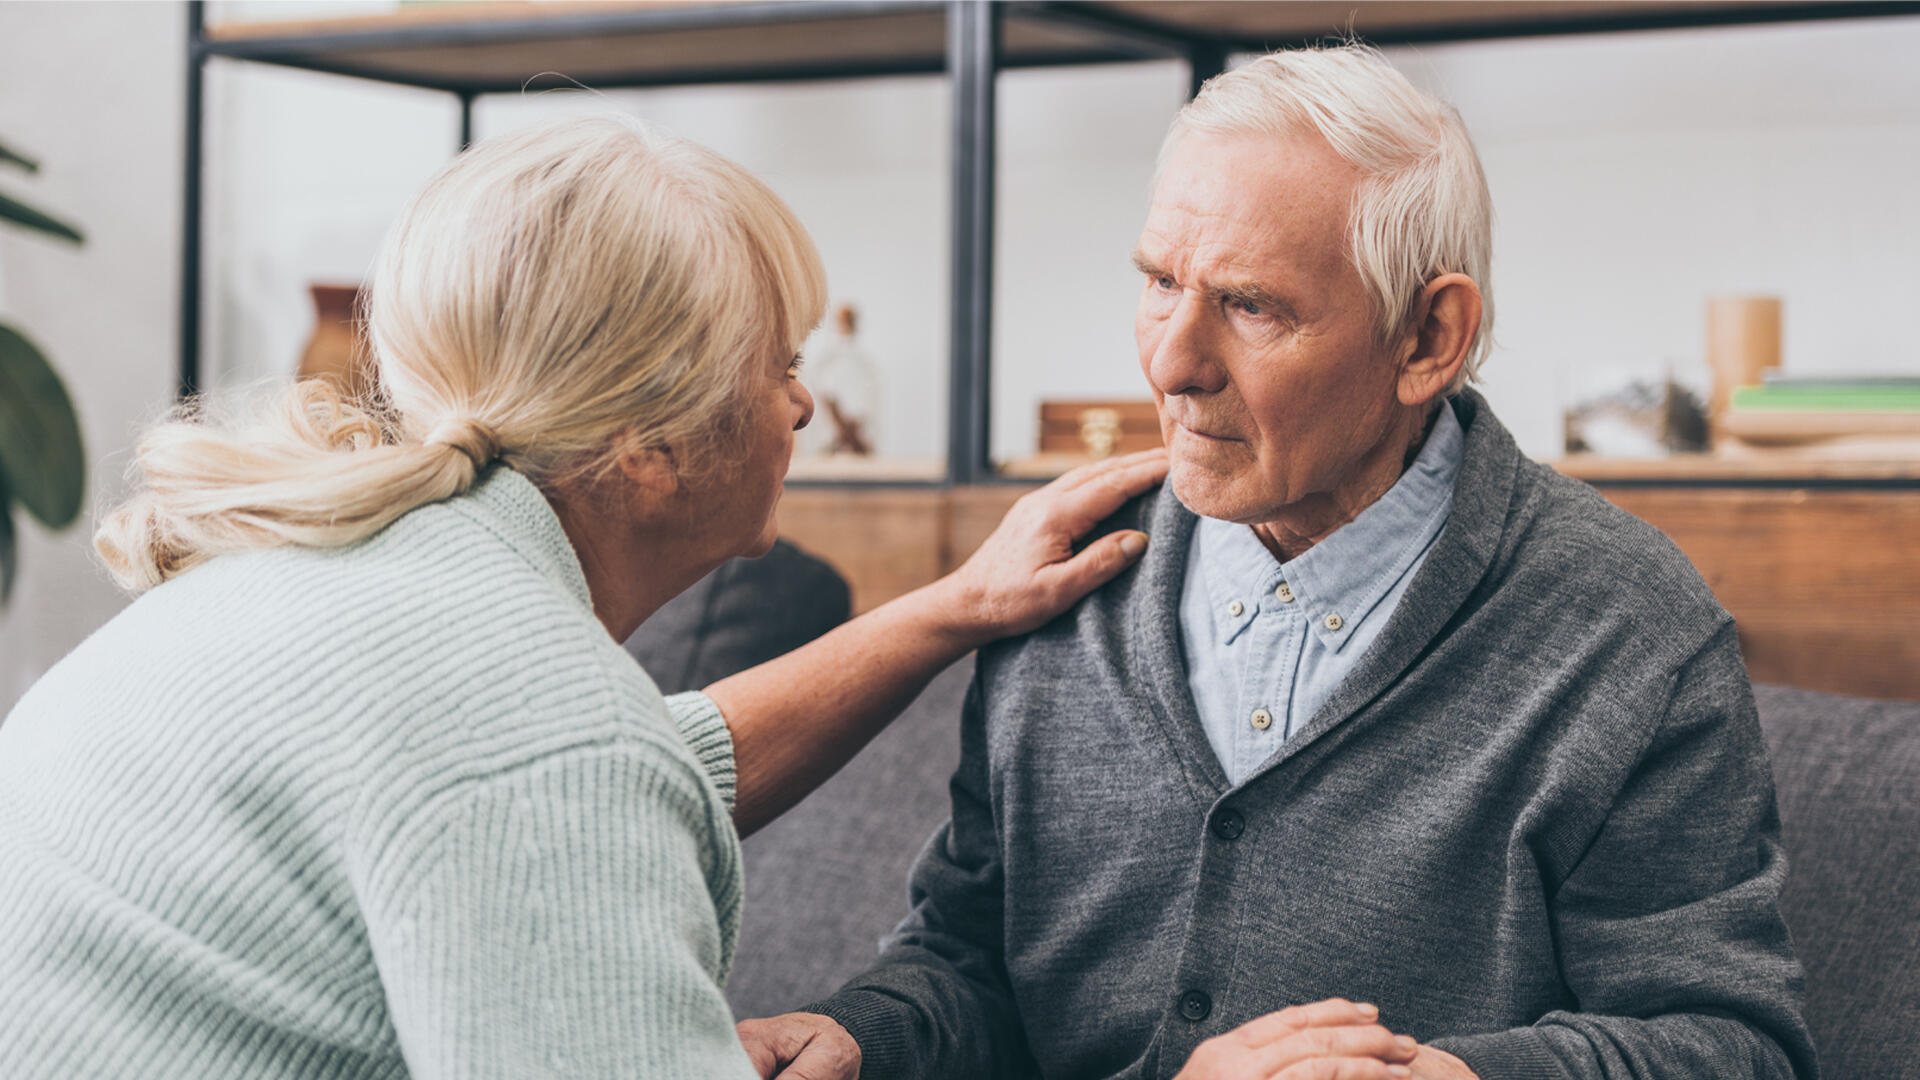 An elderly woman comforting a senior man